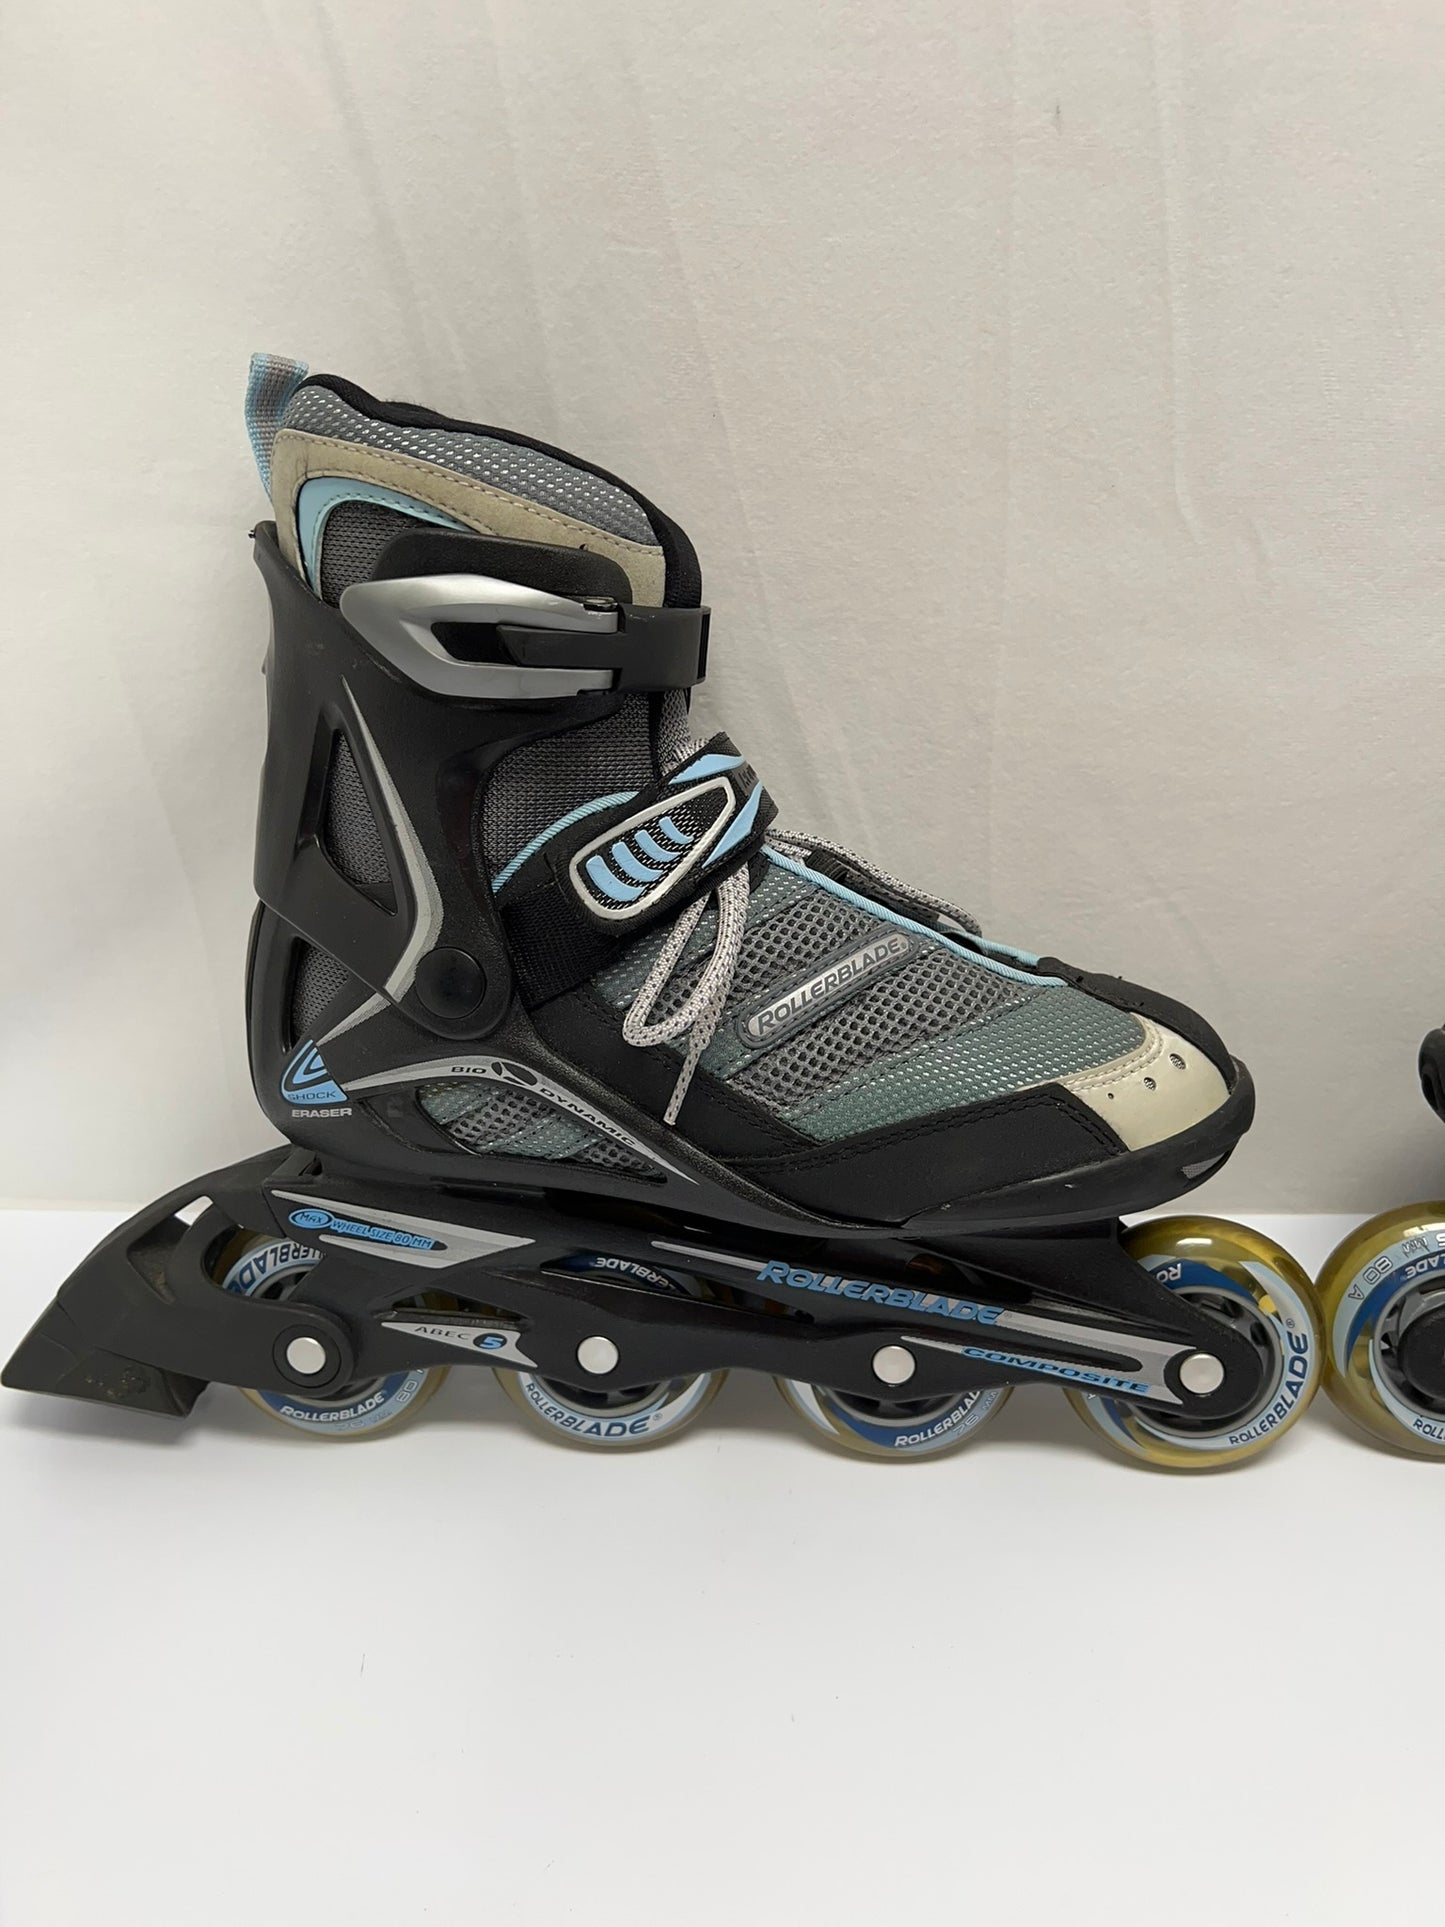 Inline Roller Skates Ladies Size 7 Shoe Size Rollerblade Black Blue New Demo Model  Rubber Wheels